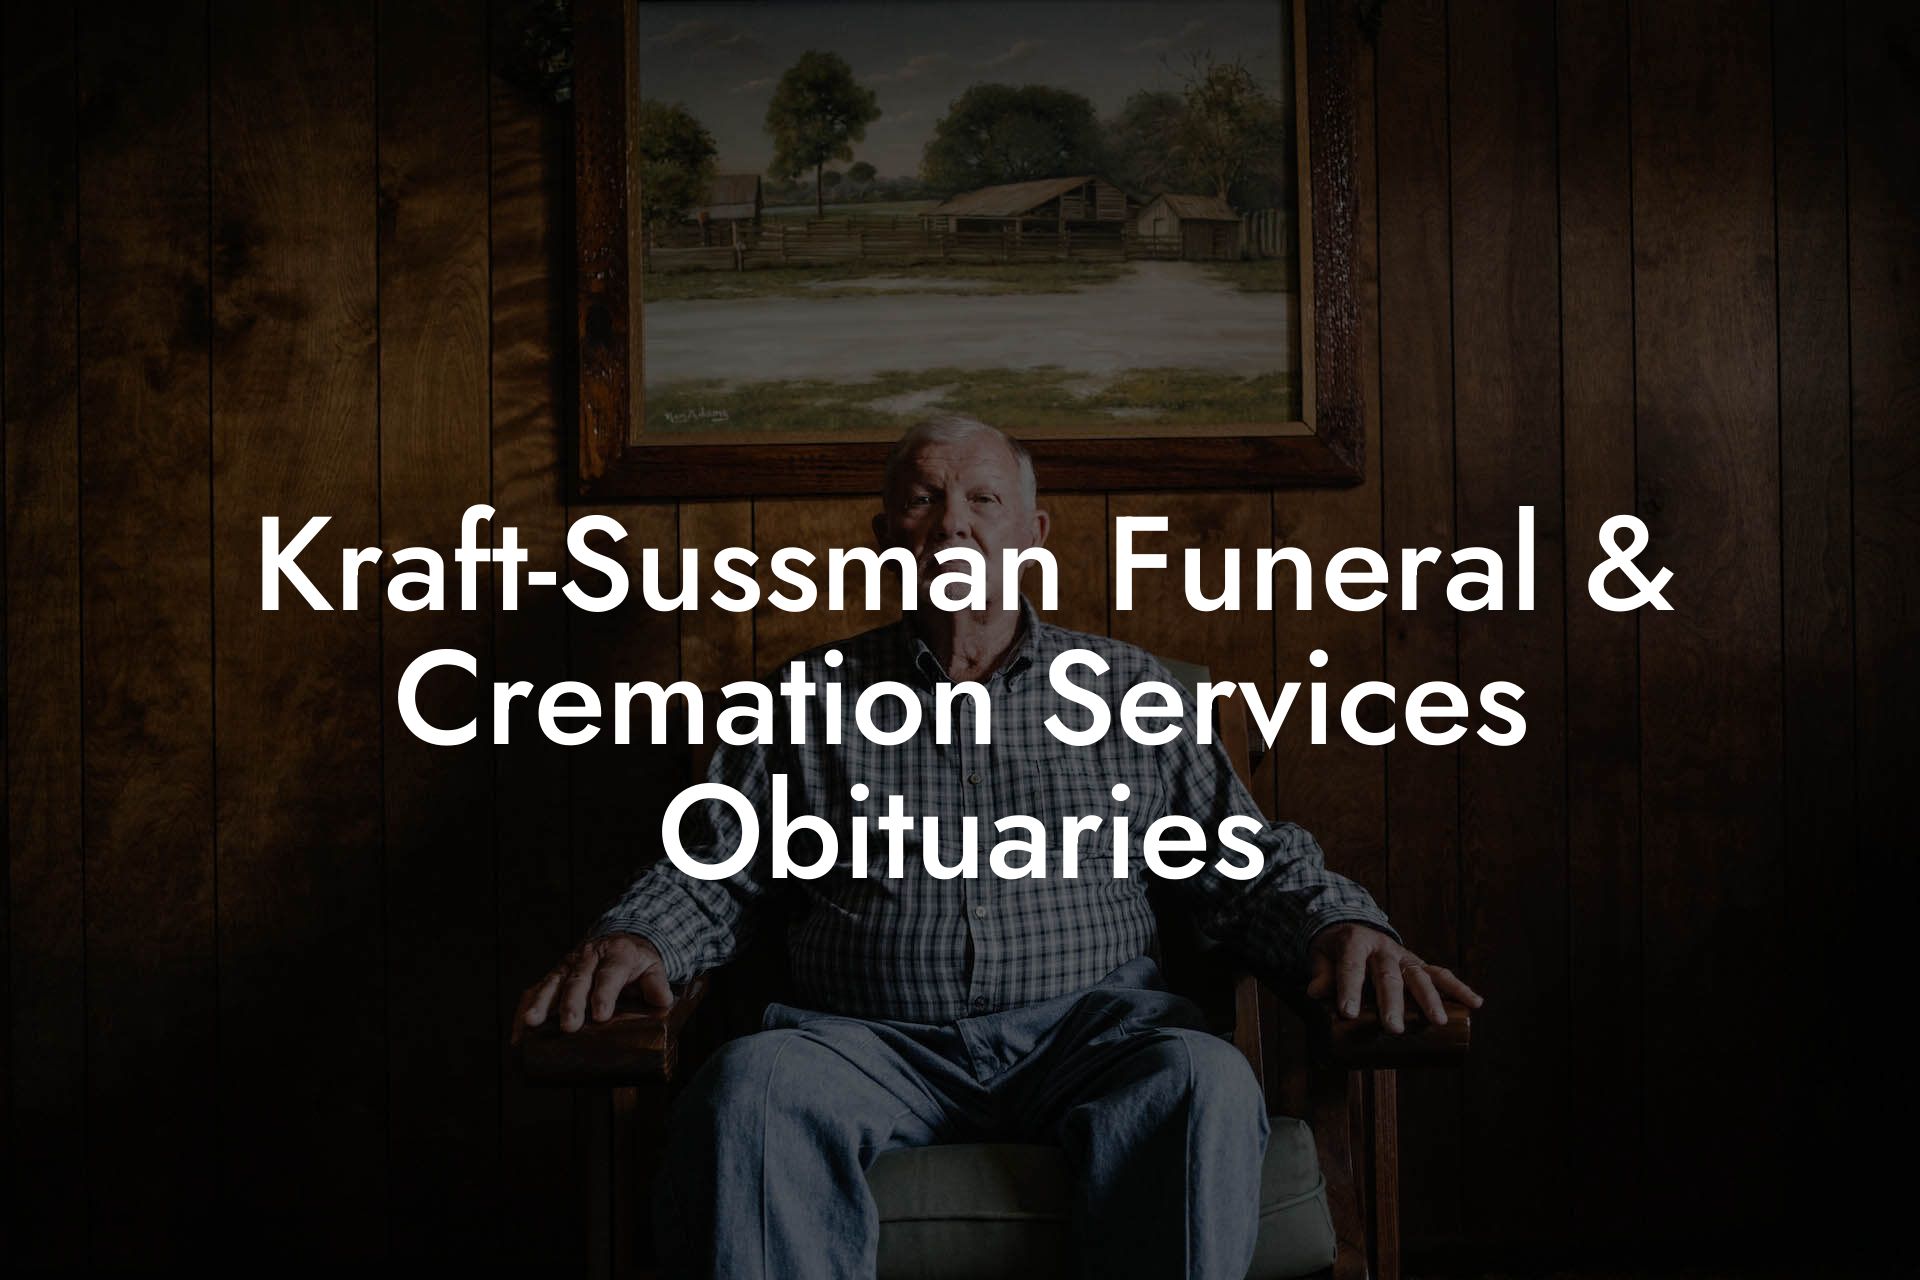 Kraft-Sussman Funeral & Cremation Services Obituaries